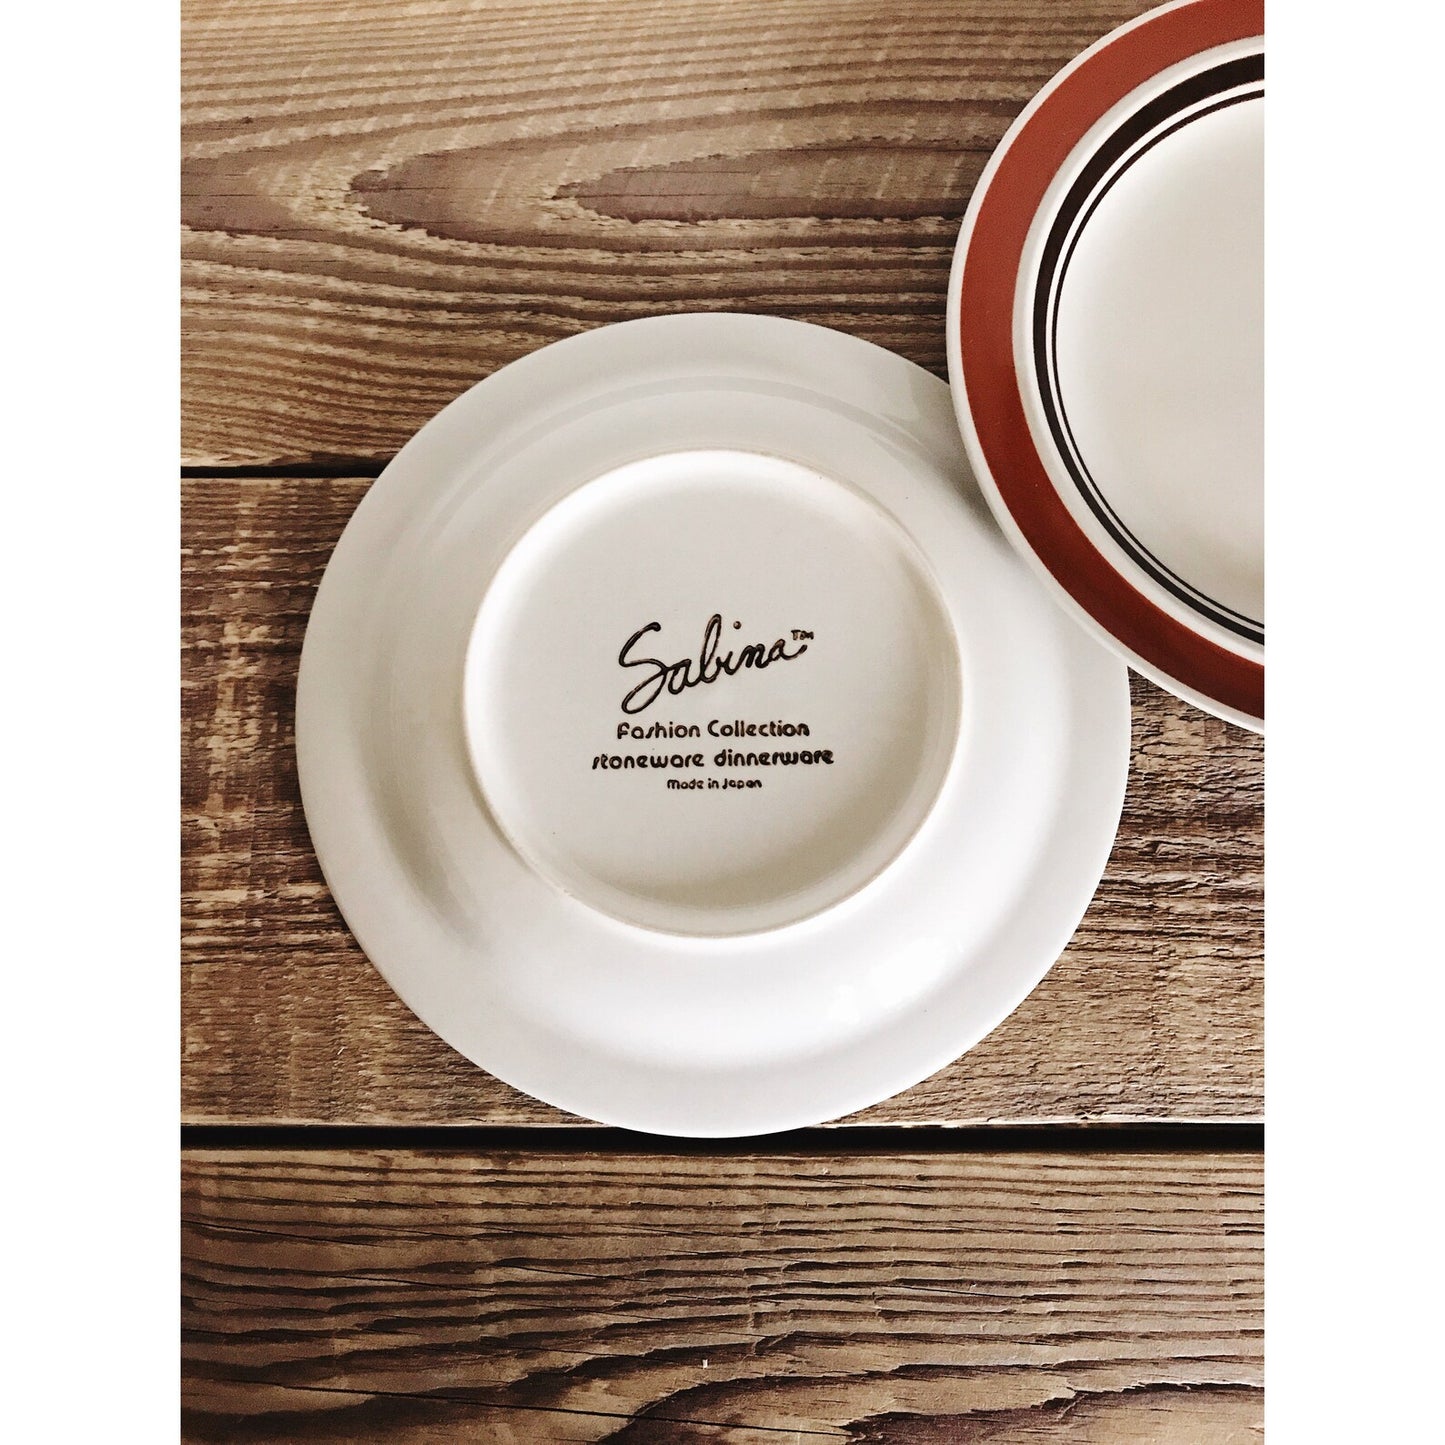 Sabina Fashion Collection Japan Stoneware Salad Plate / Dessert Plate